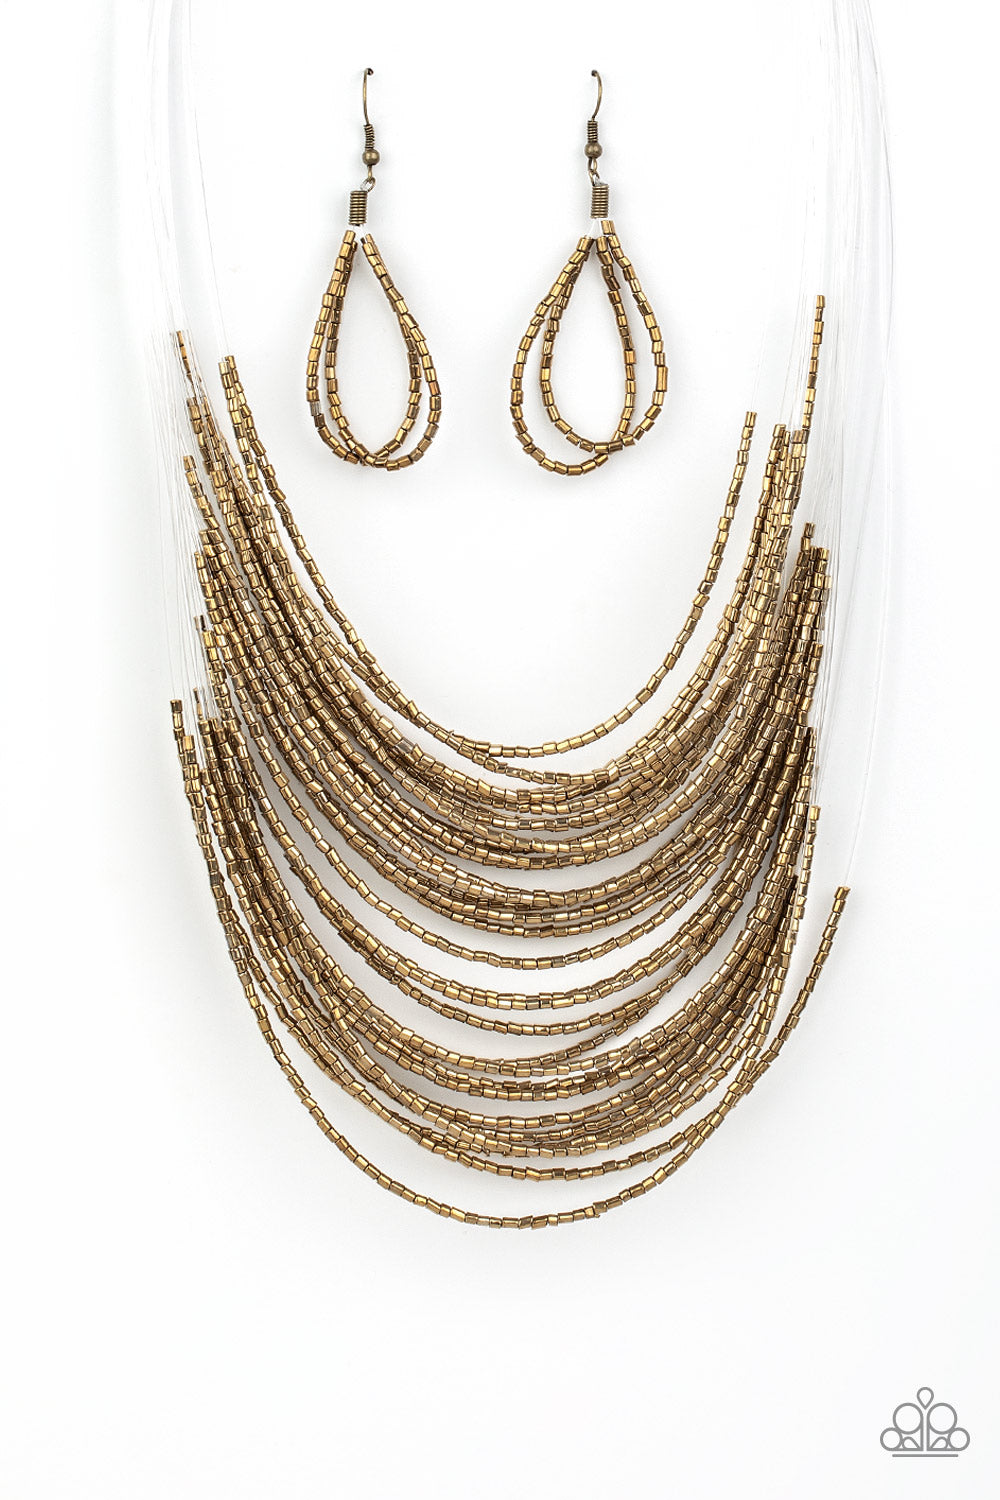 Catwalk Queen - Brass Seed Bead Necklace Set - Princess Glam Shop